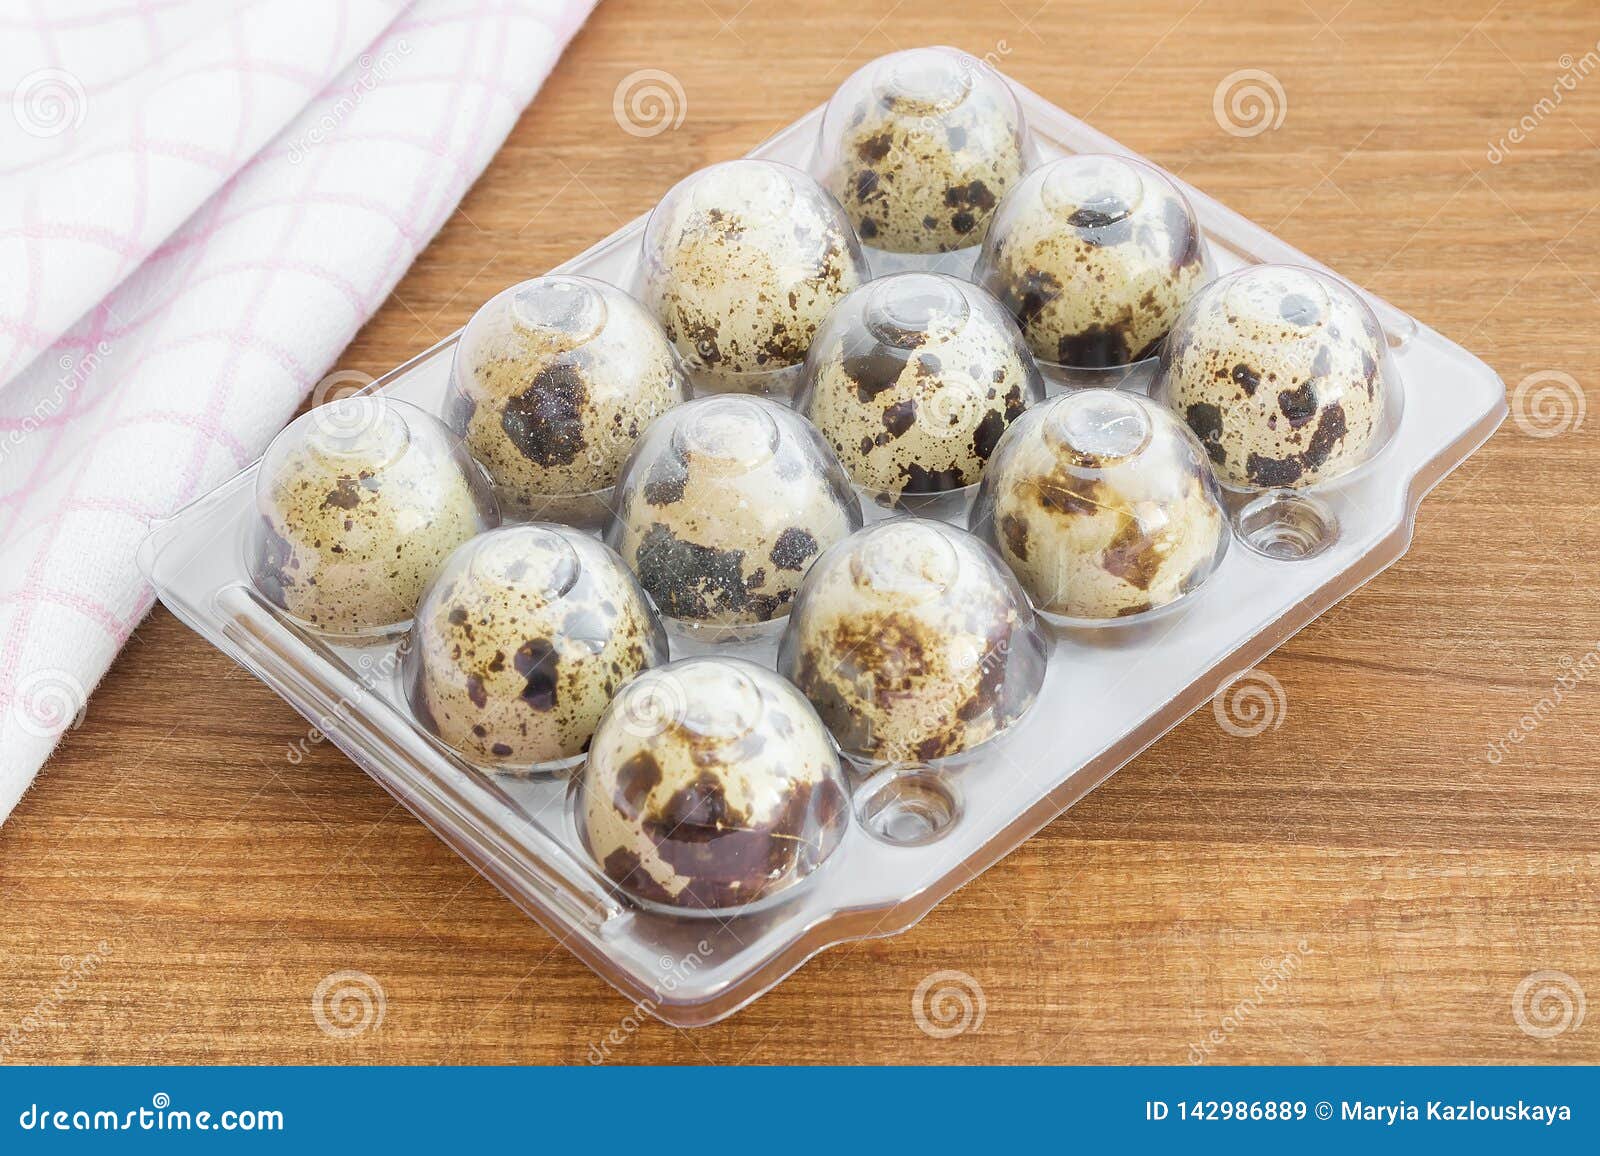 https://thumbs.dreamstime.com/z/twelve-motley-quail-eggs-transparent-plastic-packaging-dozen-raw-brown-wooden-cutting-board-farmer-food-organic-ingredient-142986889.jpg